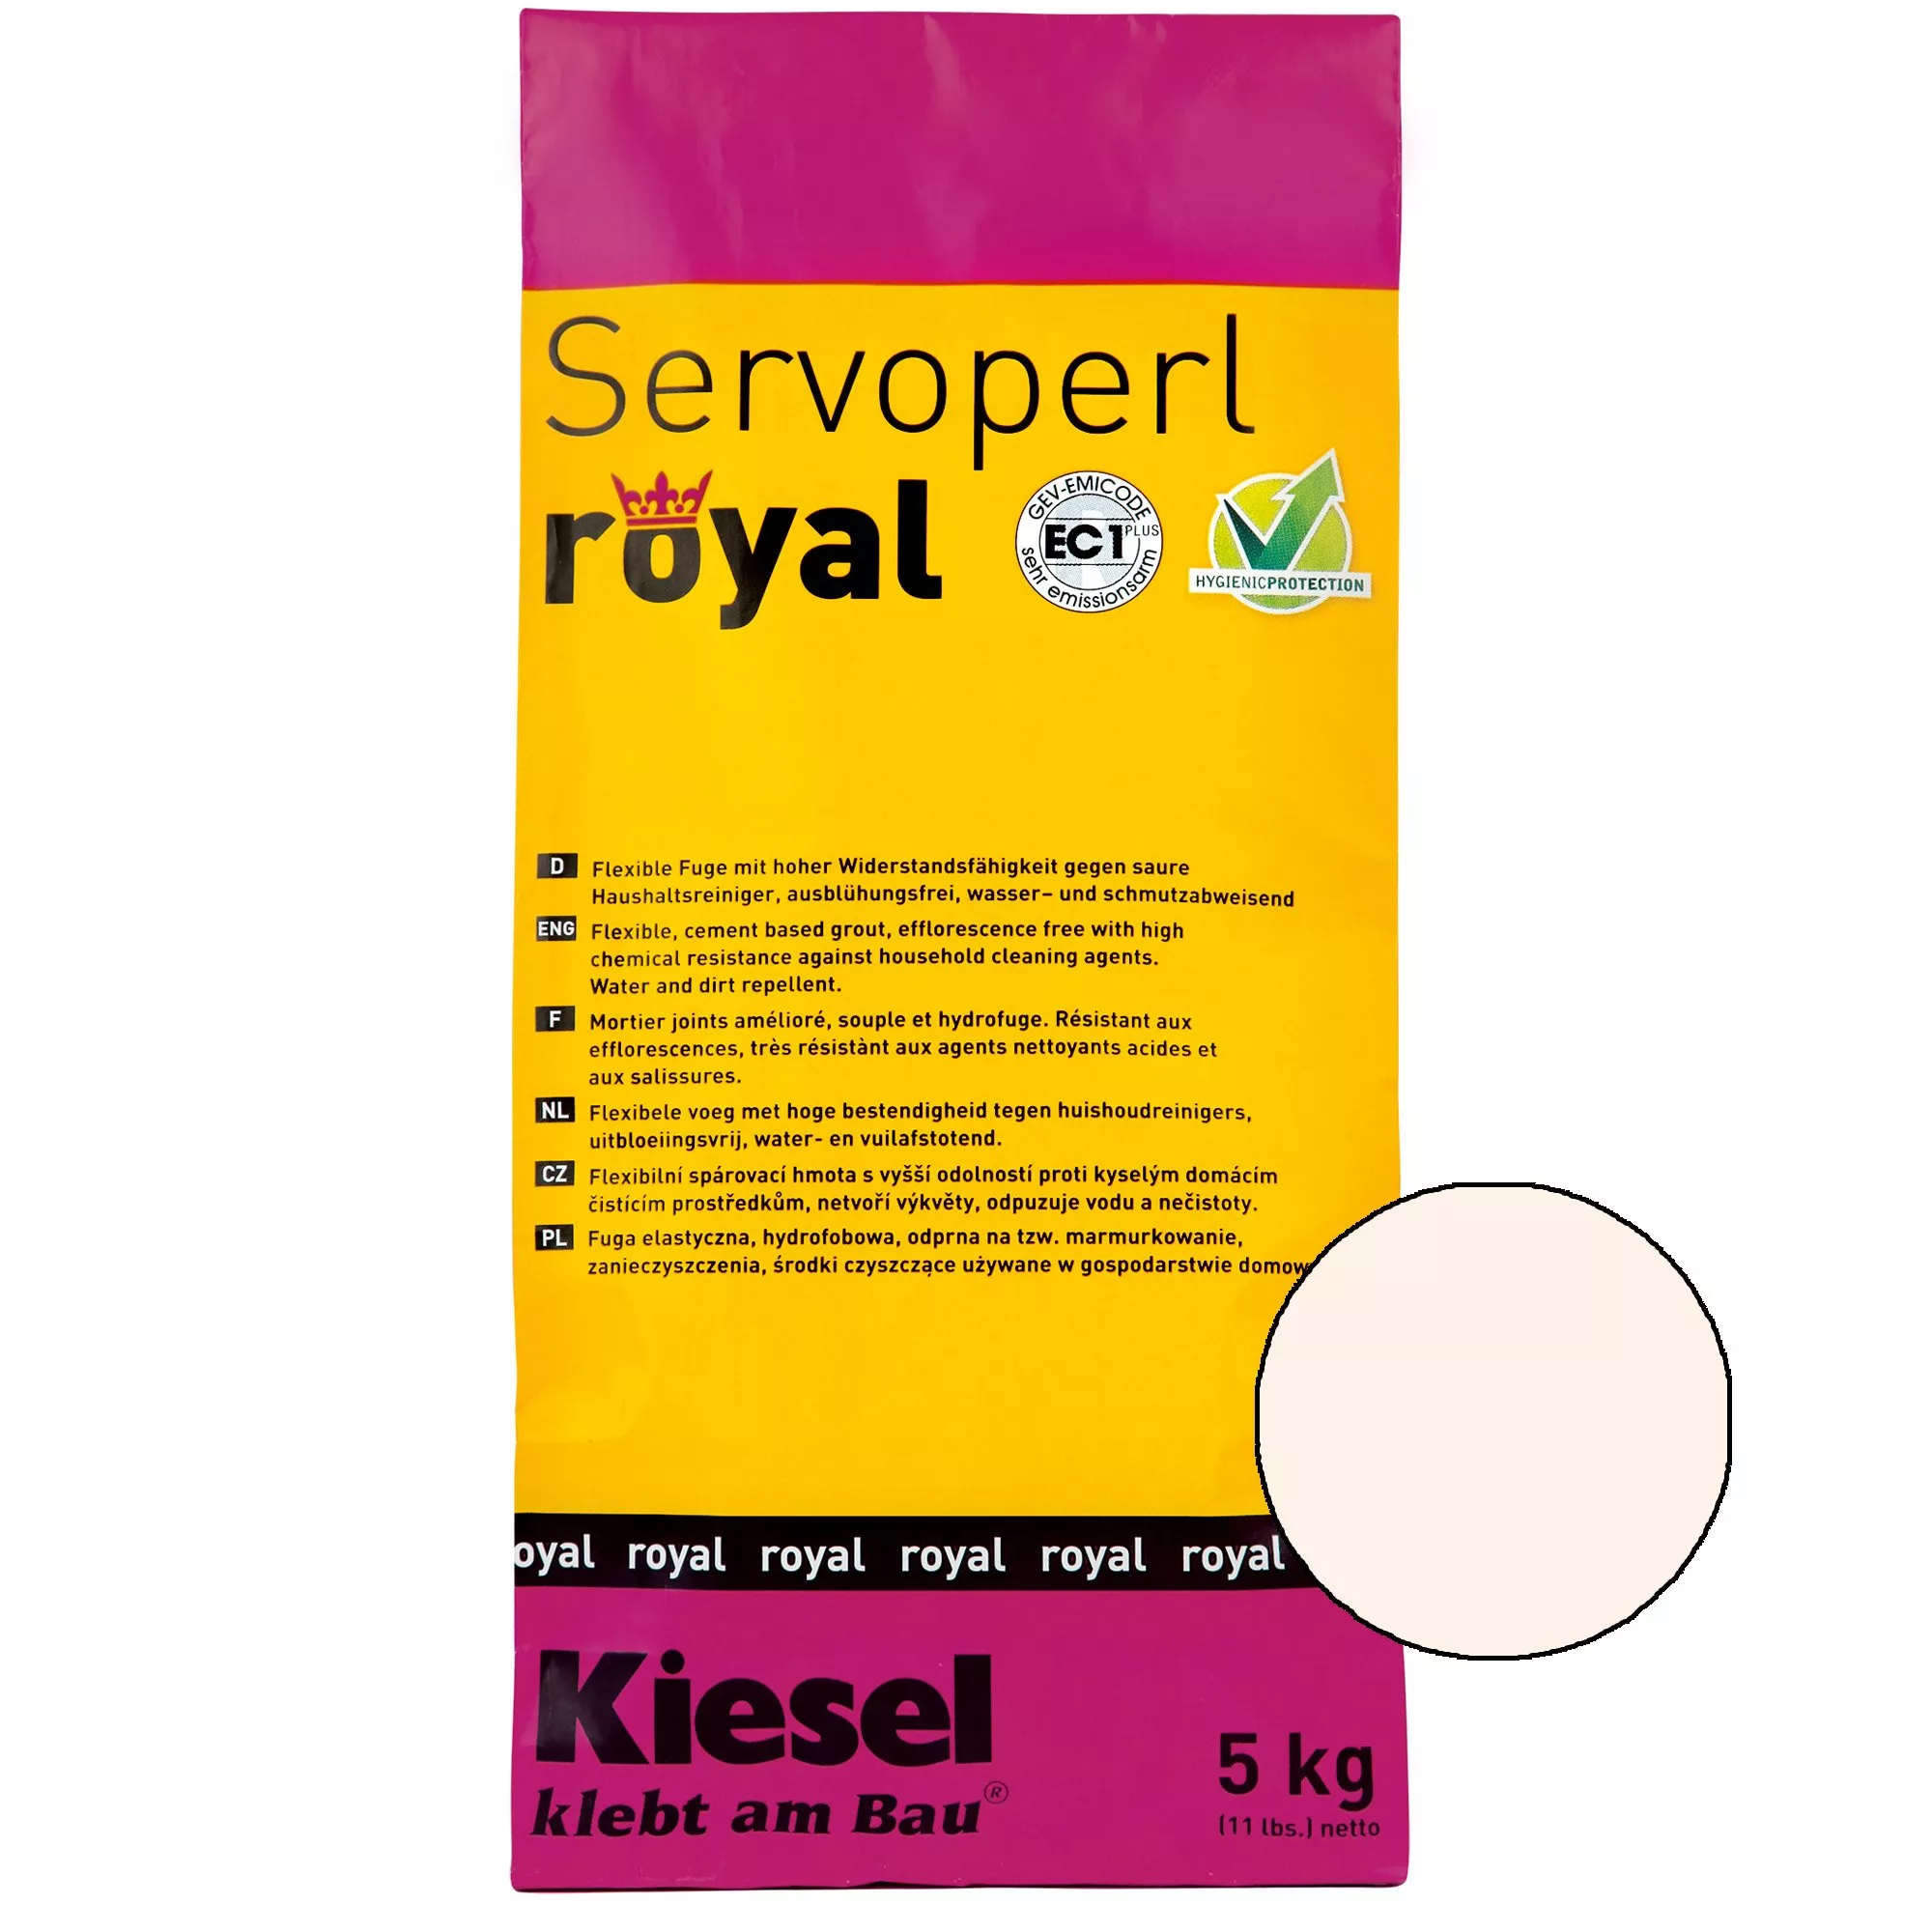 Kiesel Servoperl royal - saumaseos - 5 kg Pergamon